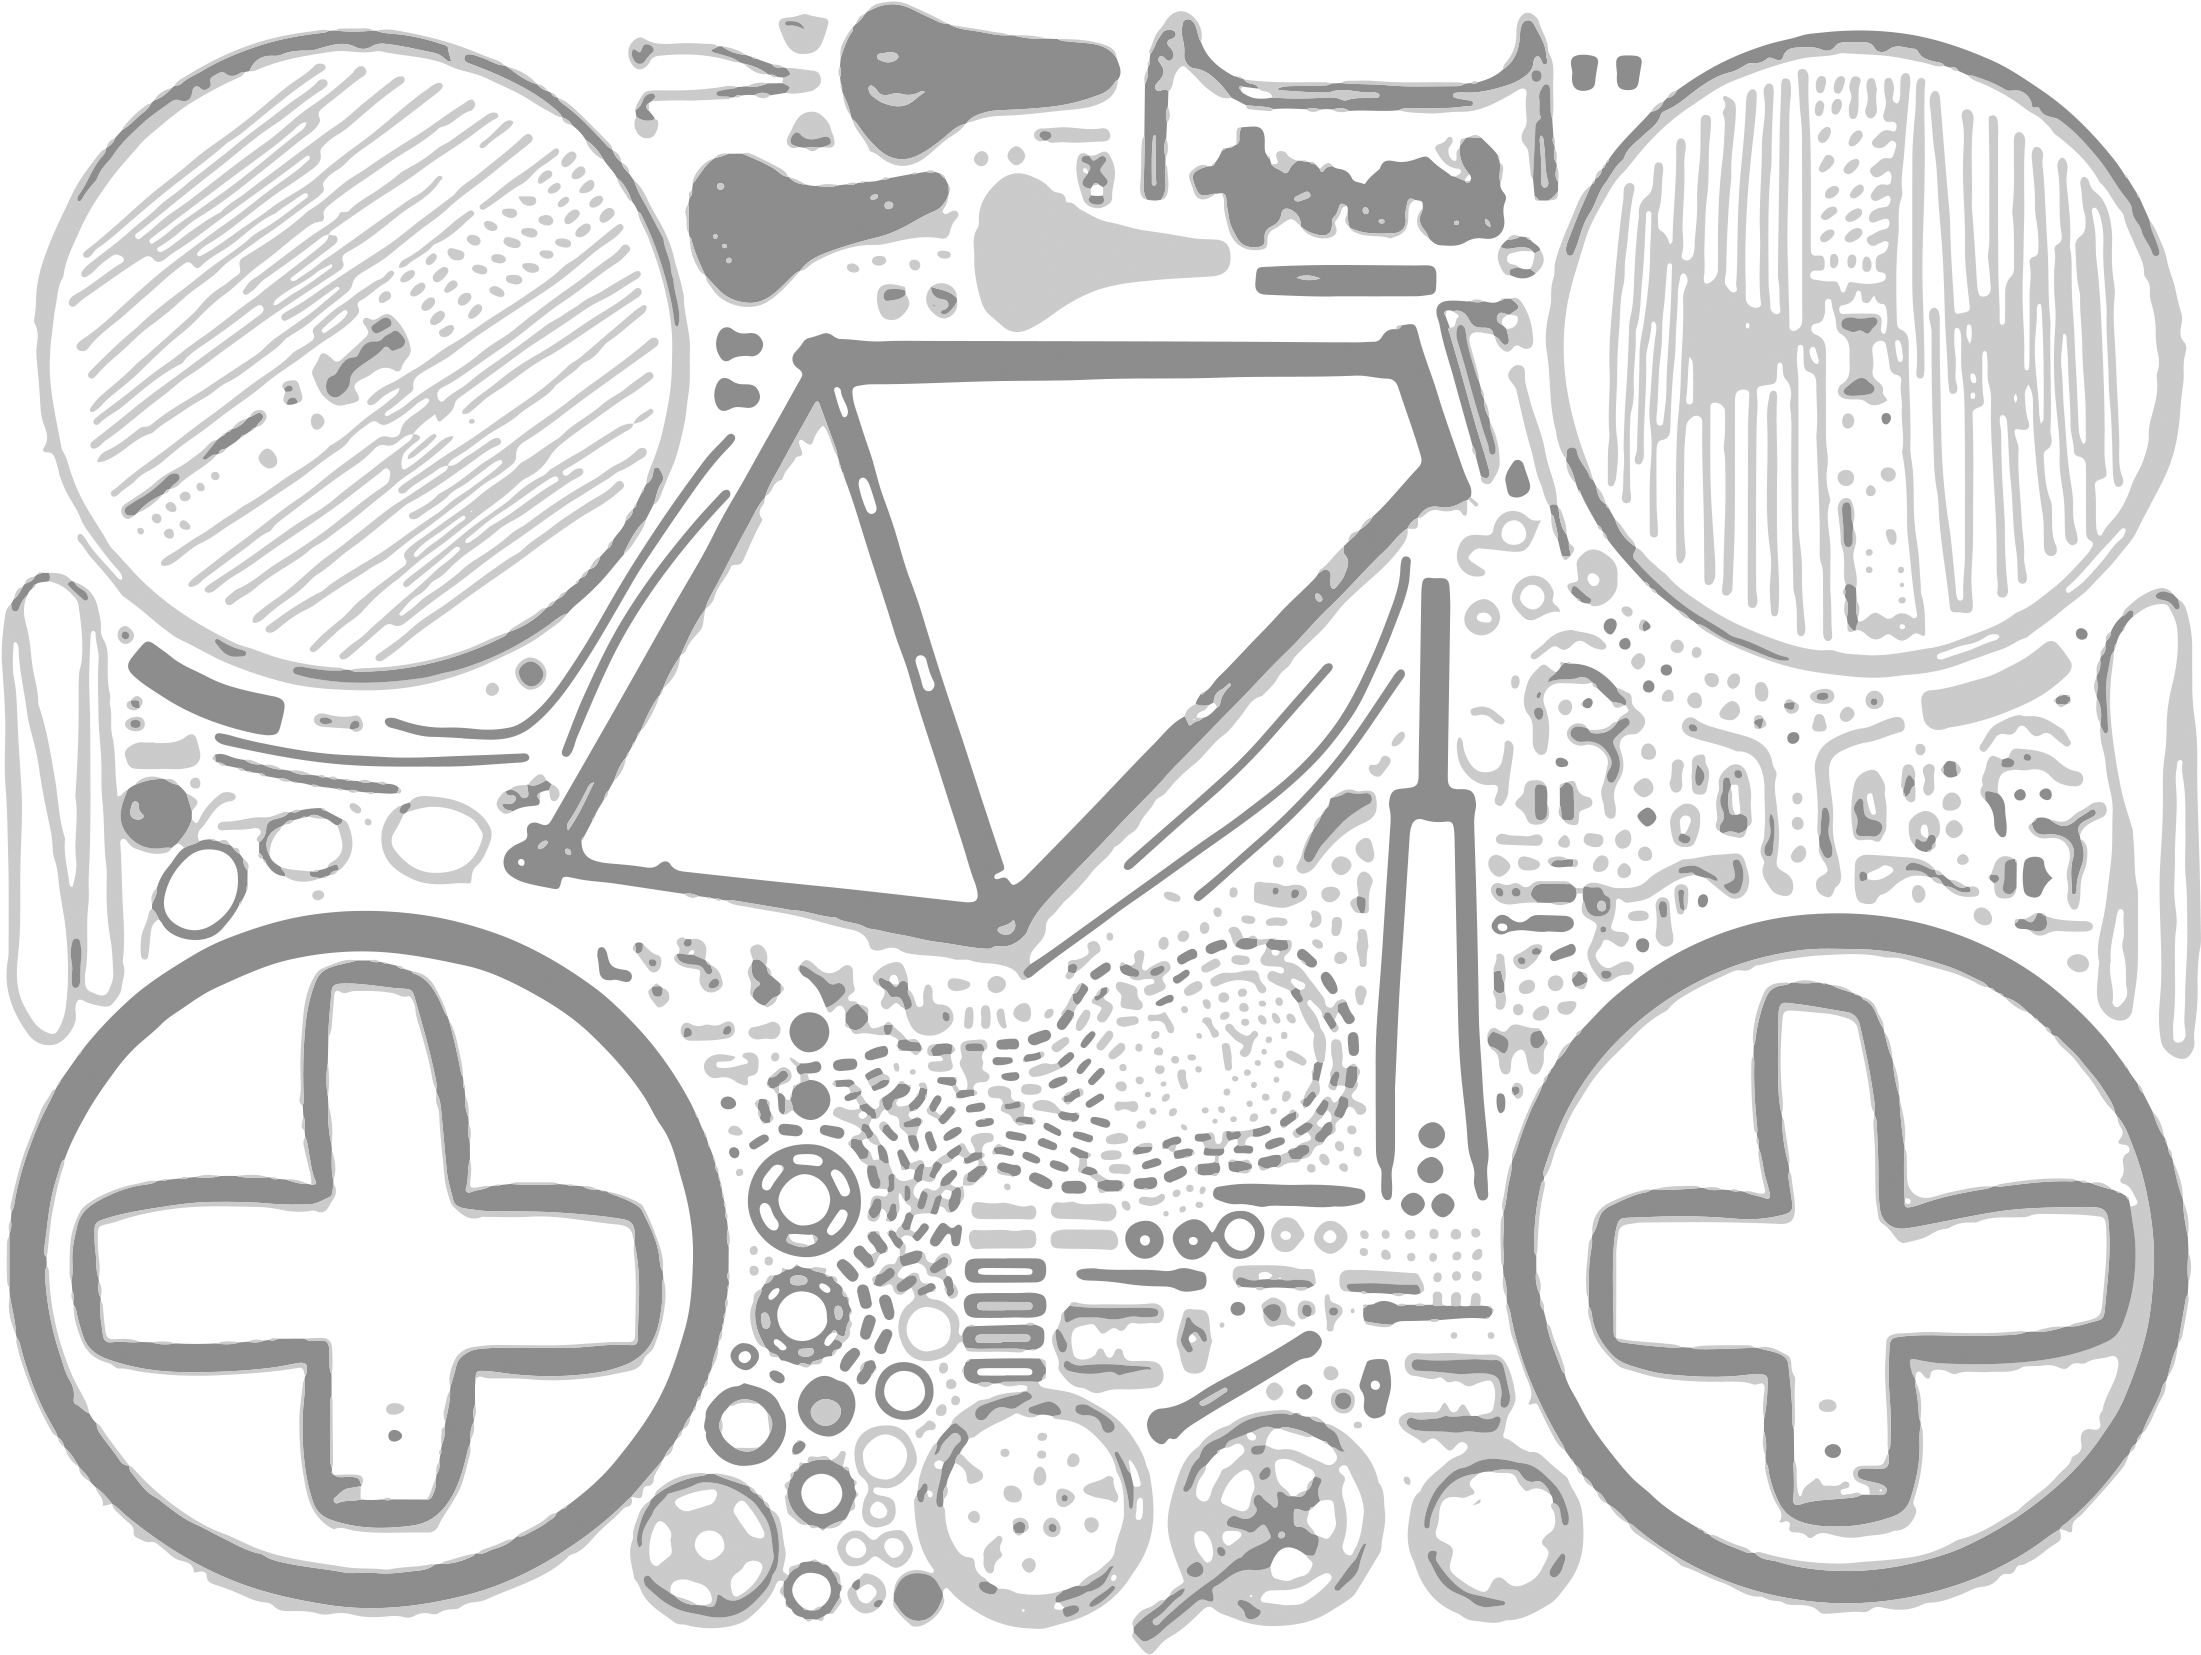 0170 Parts Of A Bicycle - Todd Mclellan Artist Bio (2400x3200)